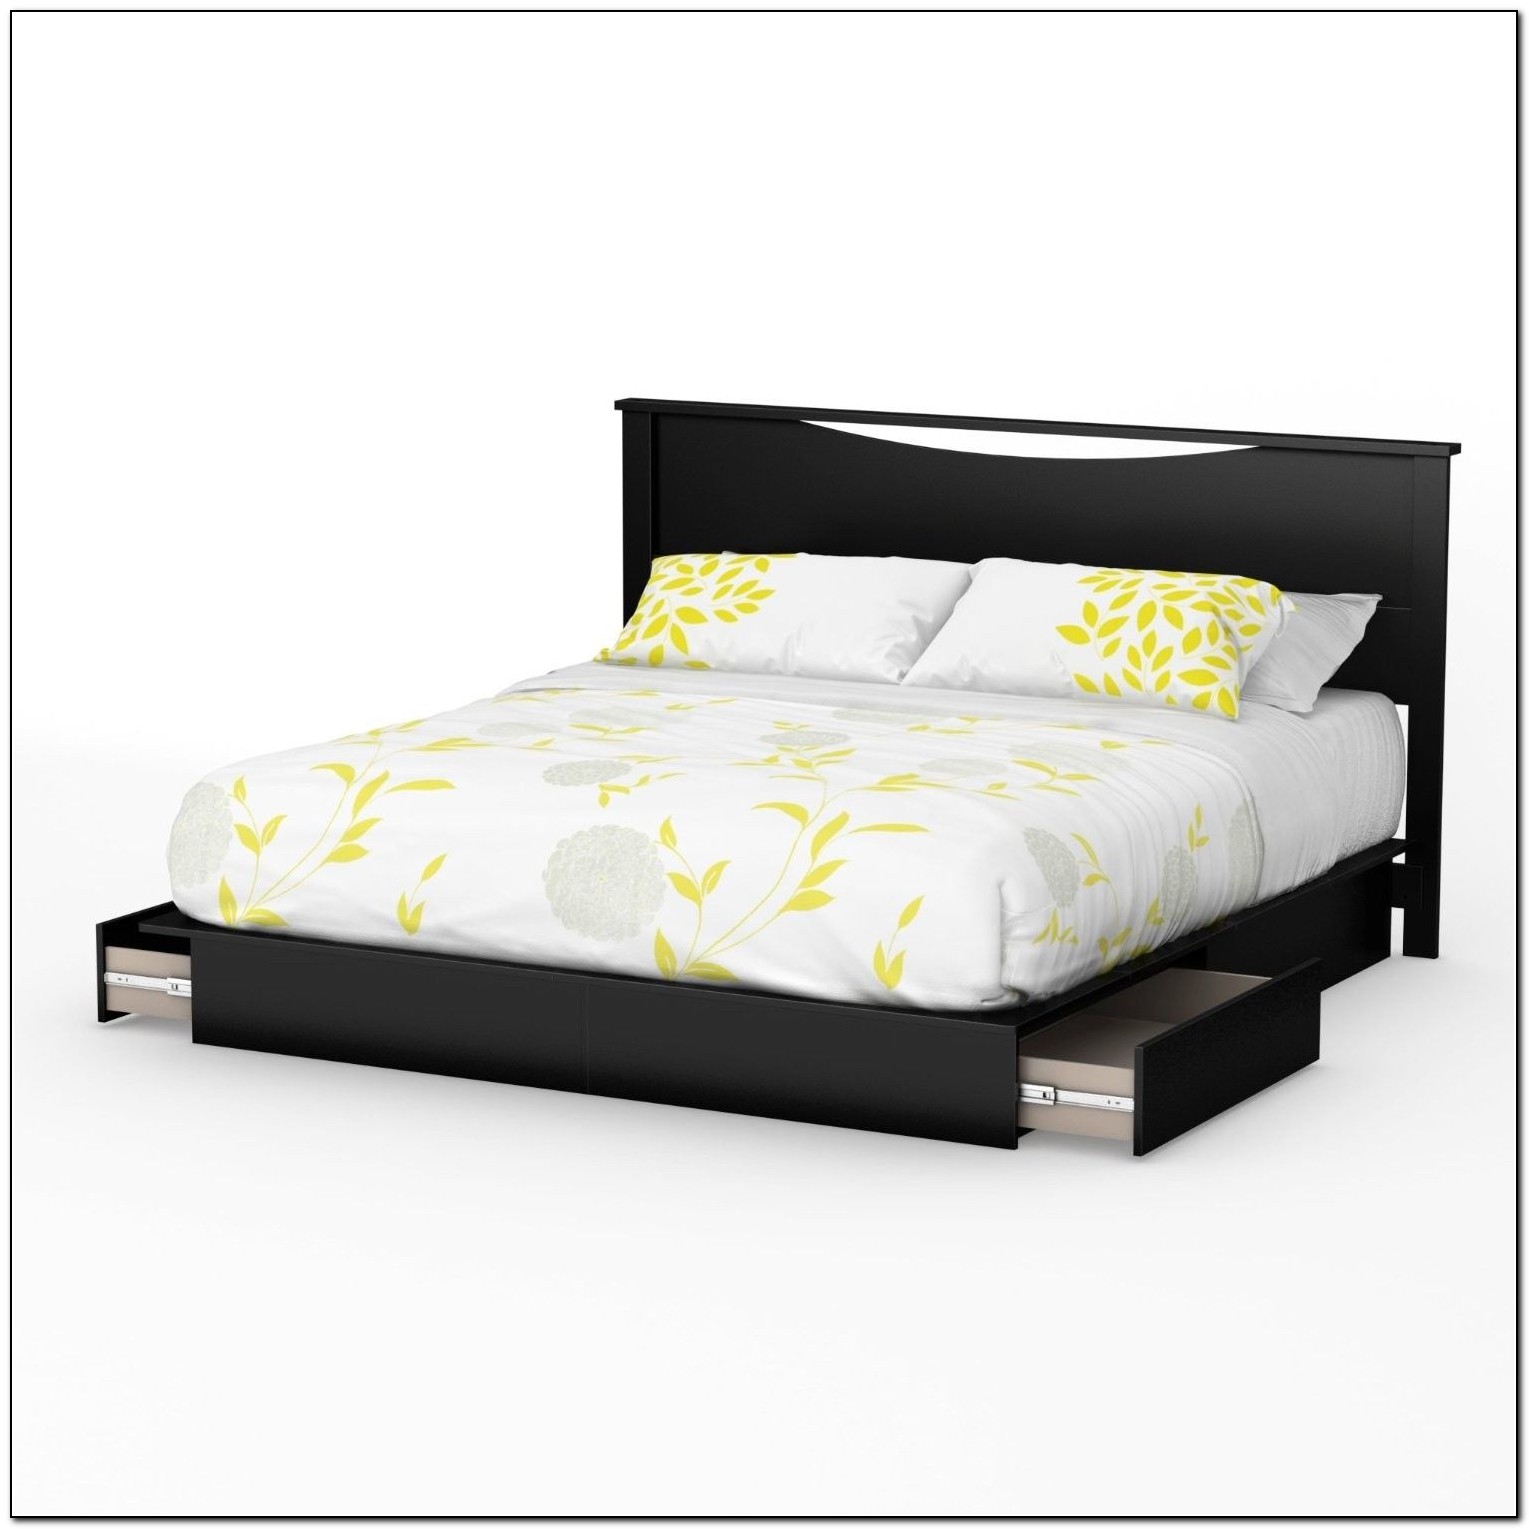 Black Platform Bed With Drawers